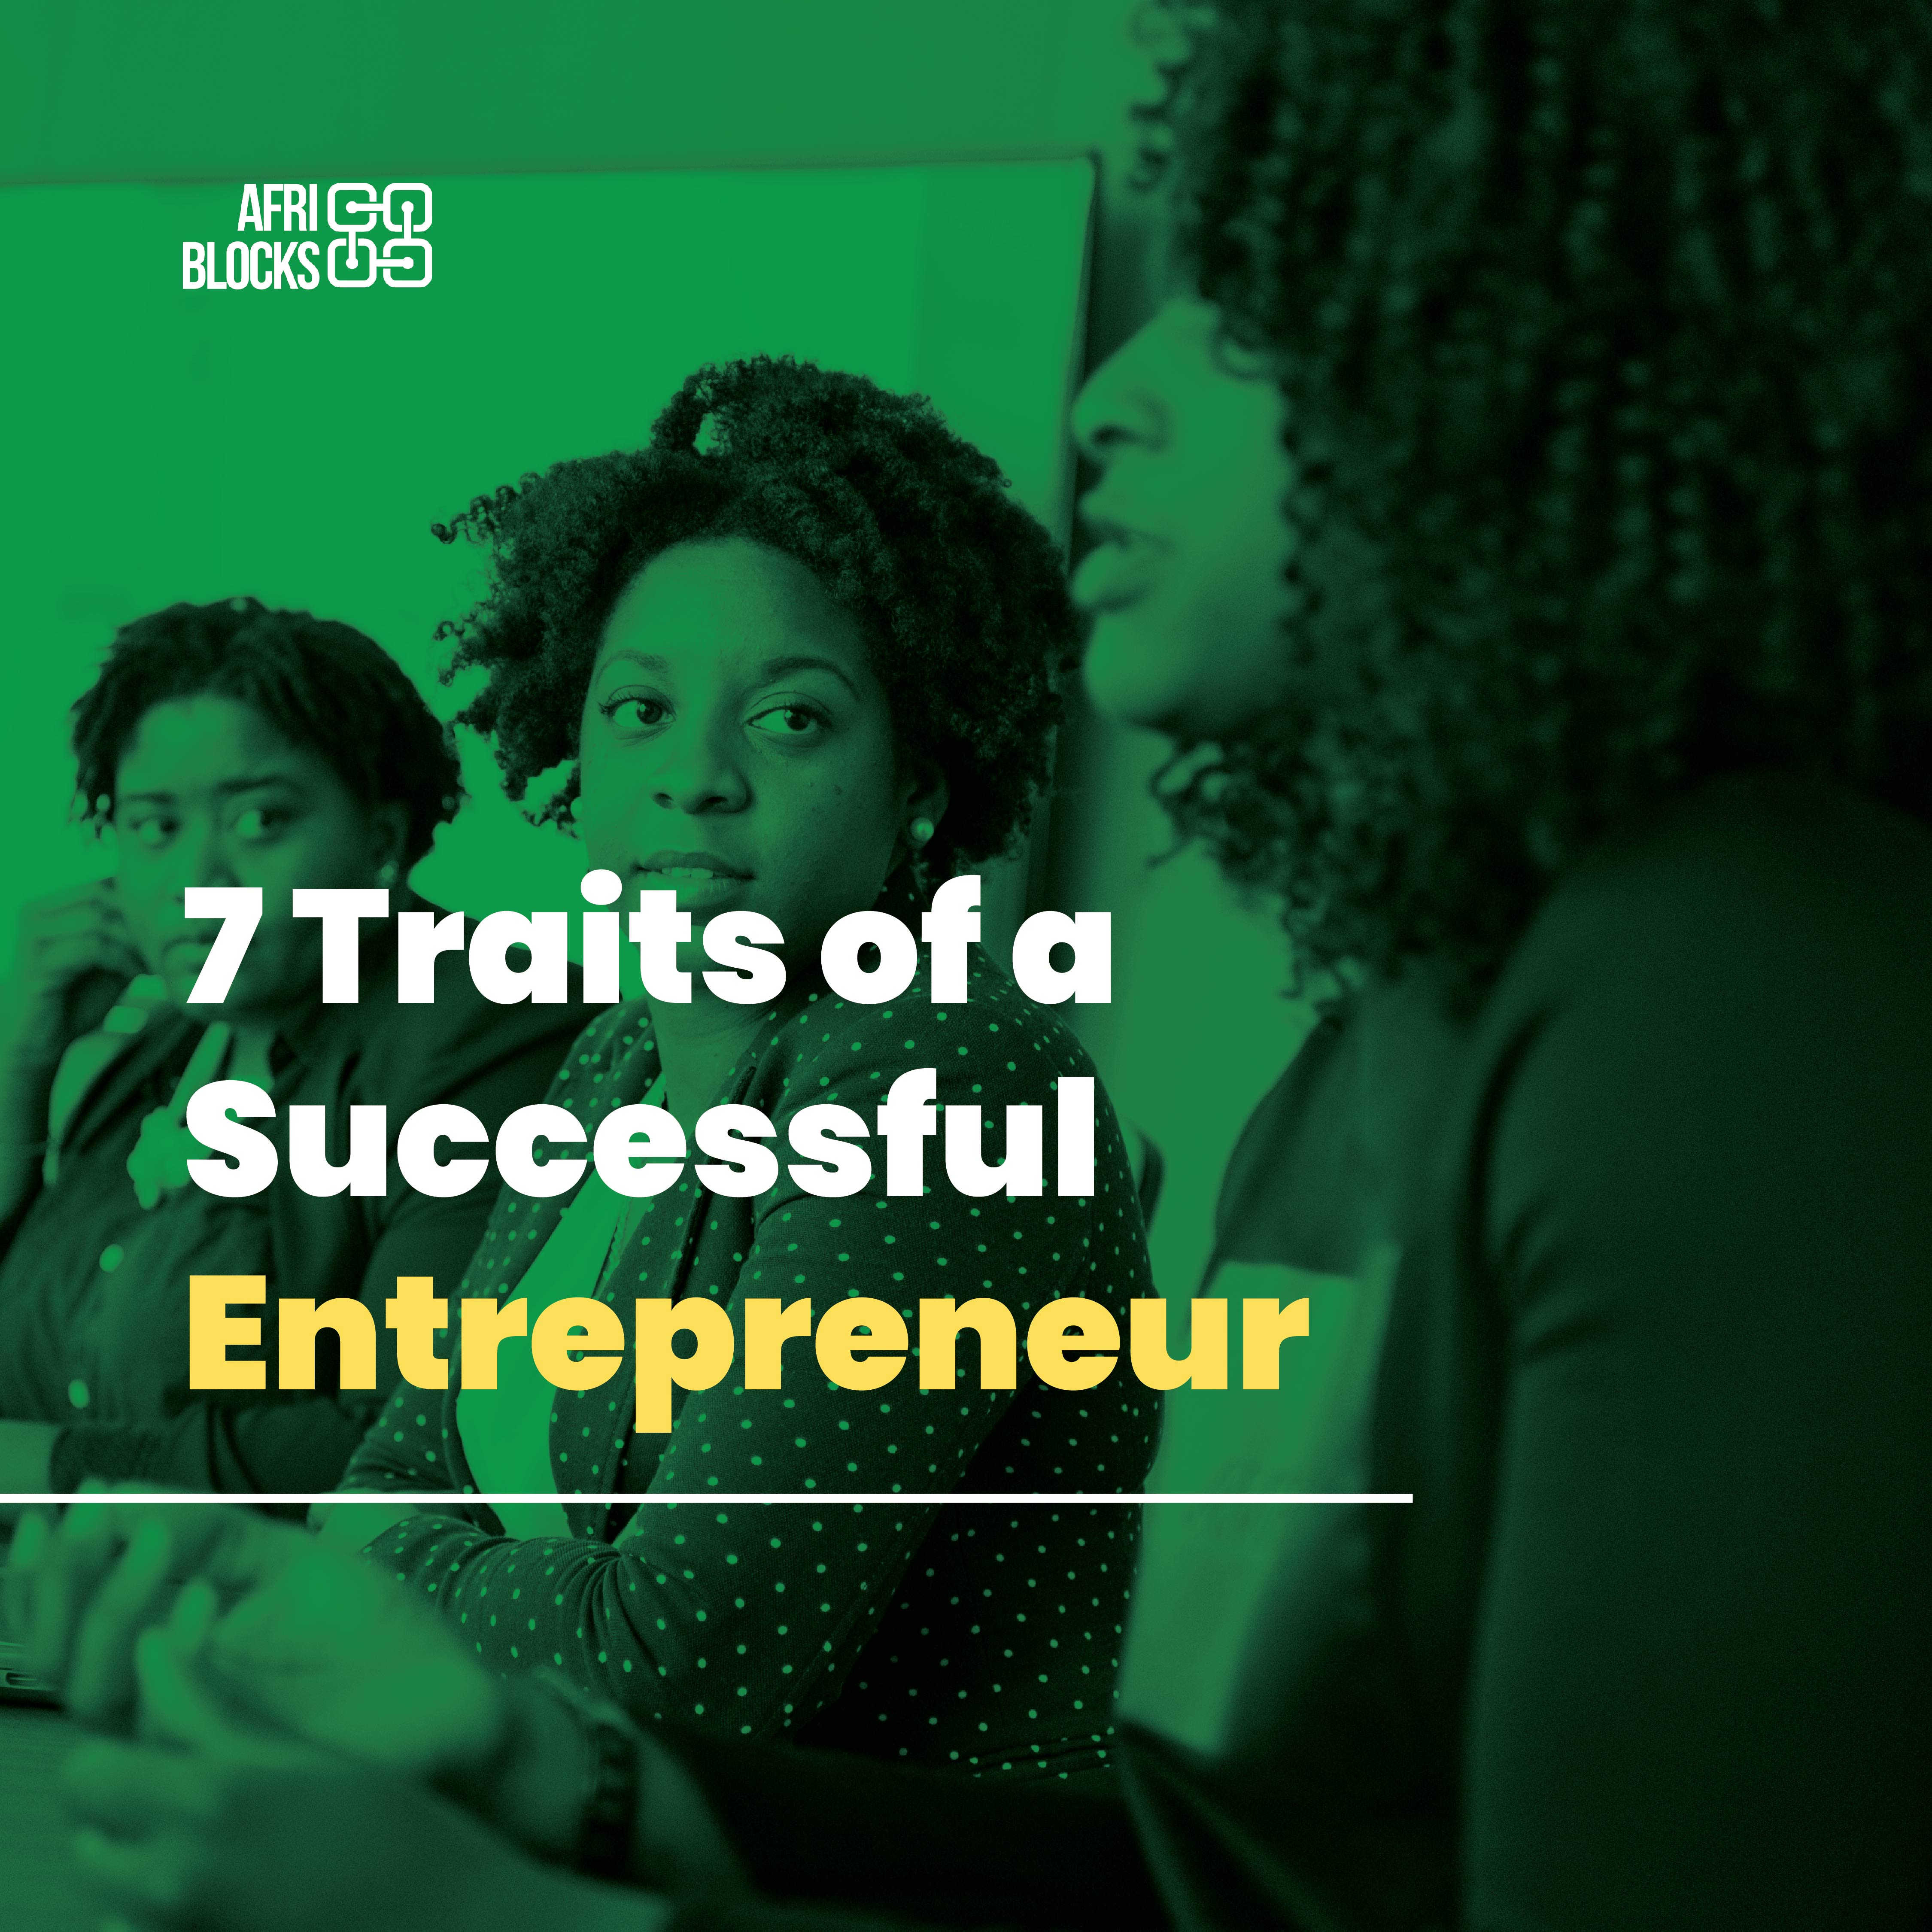 7 Traits of a Successful Entrepreneur